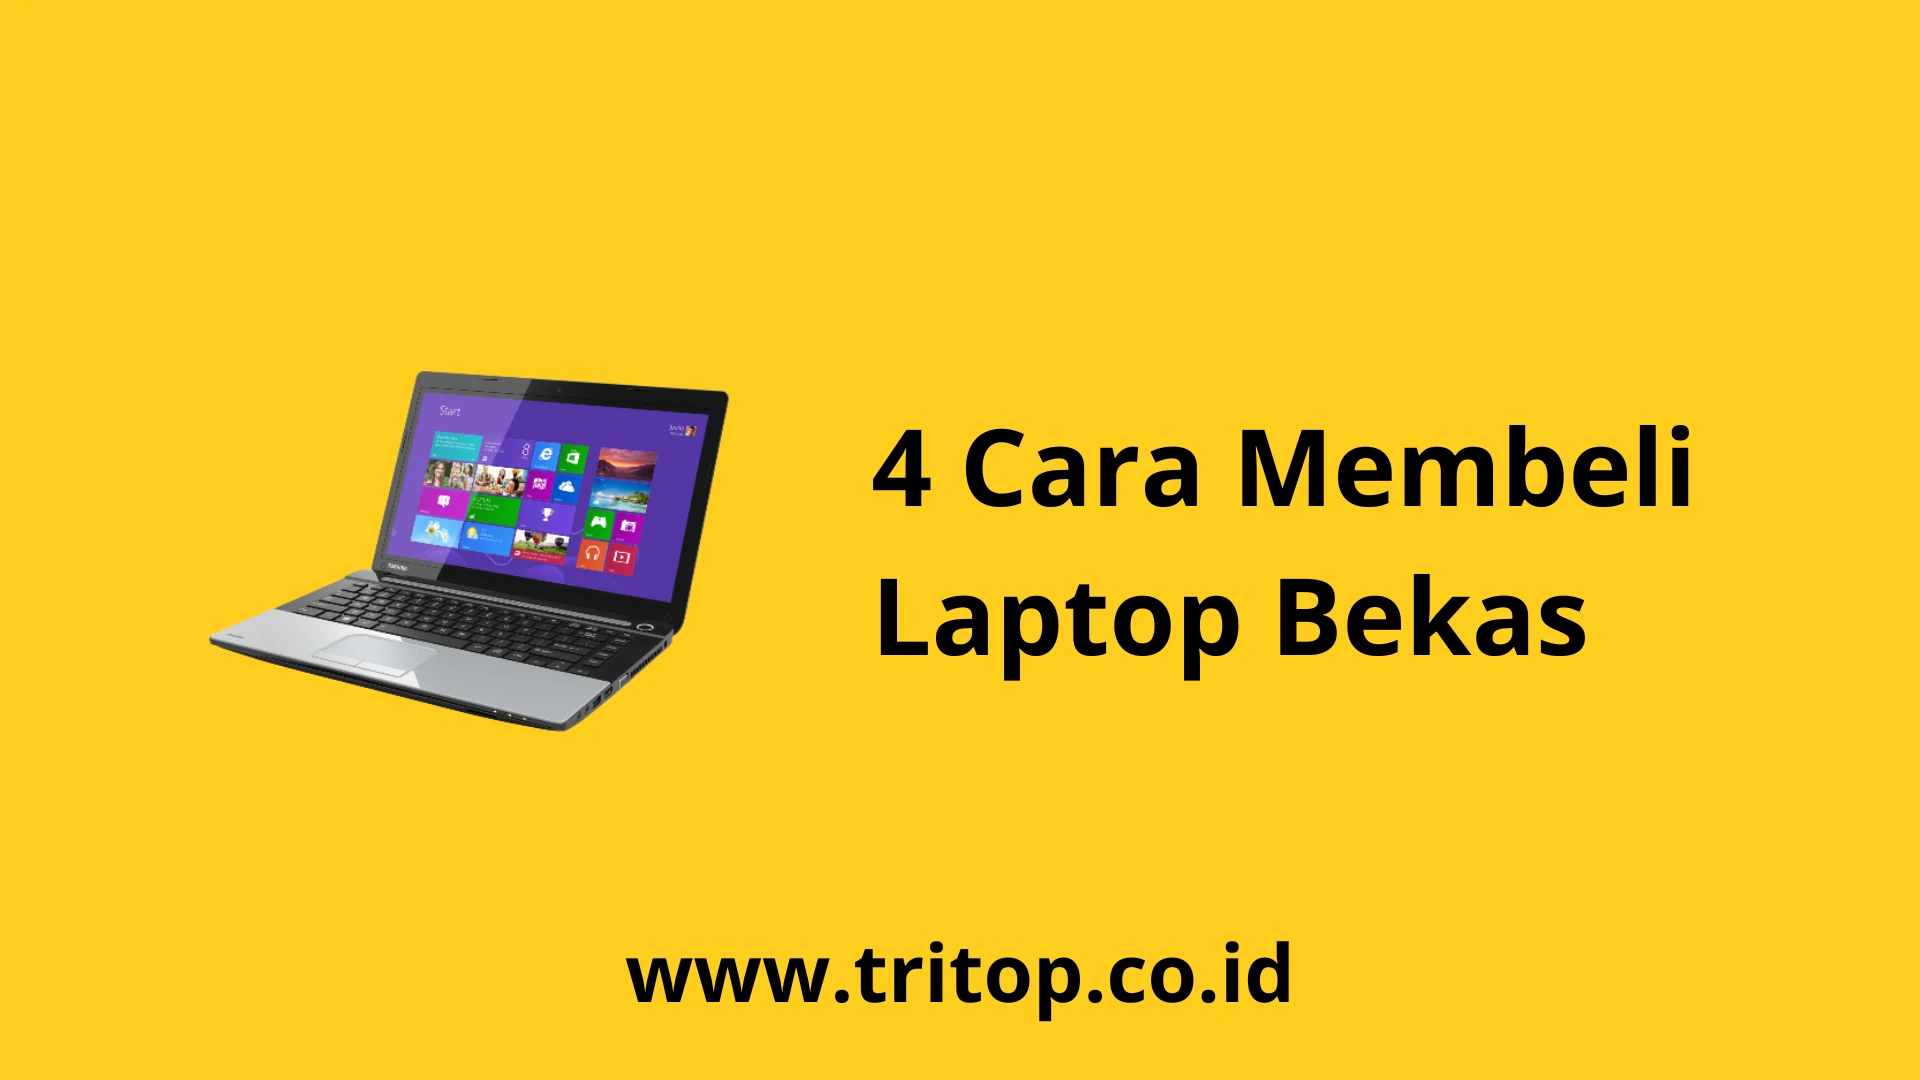 Cara Membeli Laptop Bekas Tritop.co.id